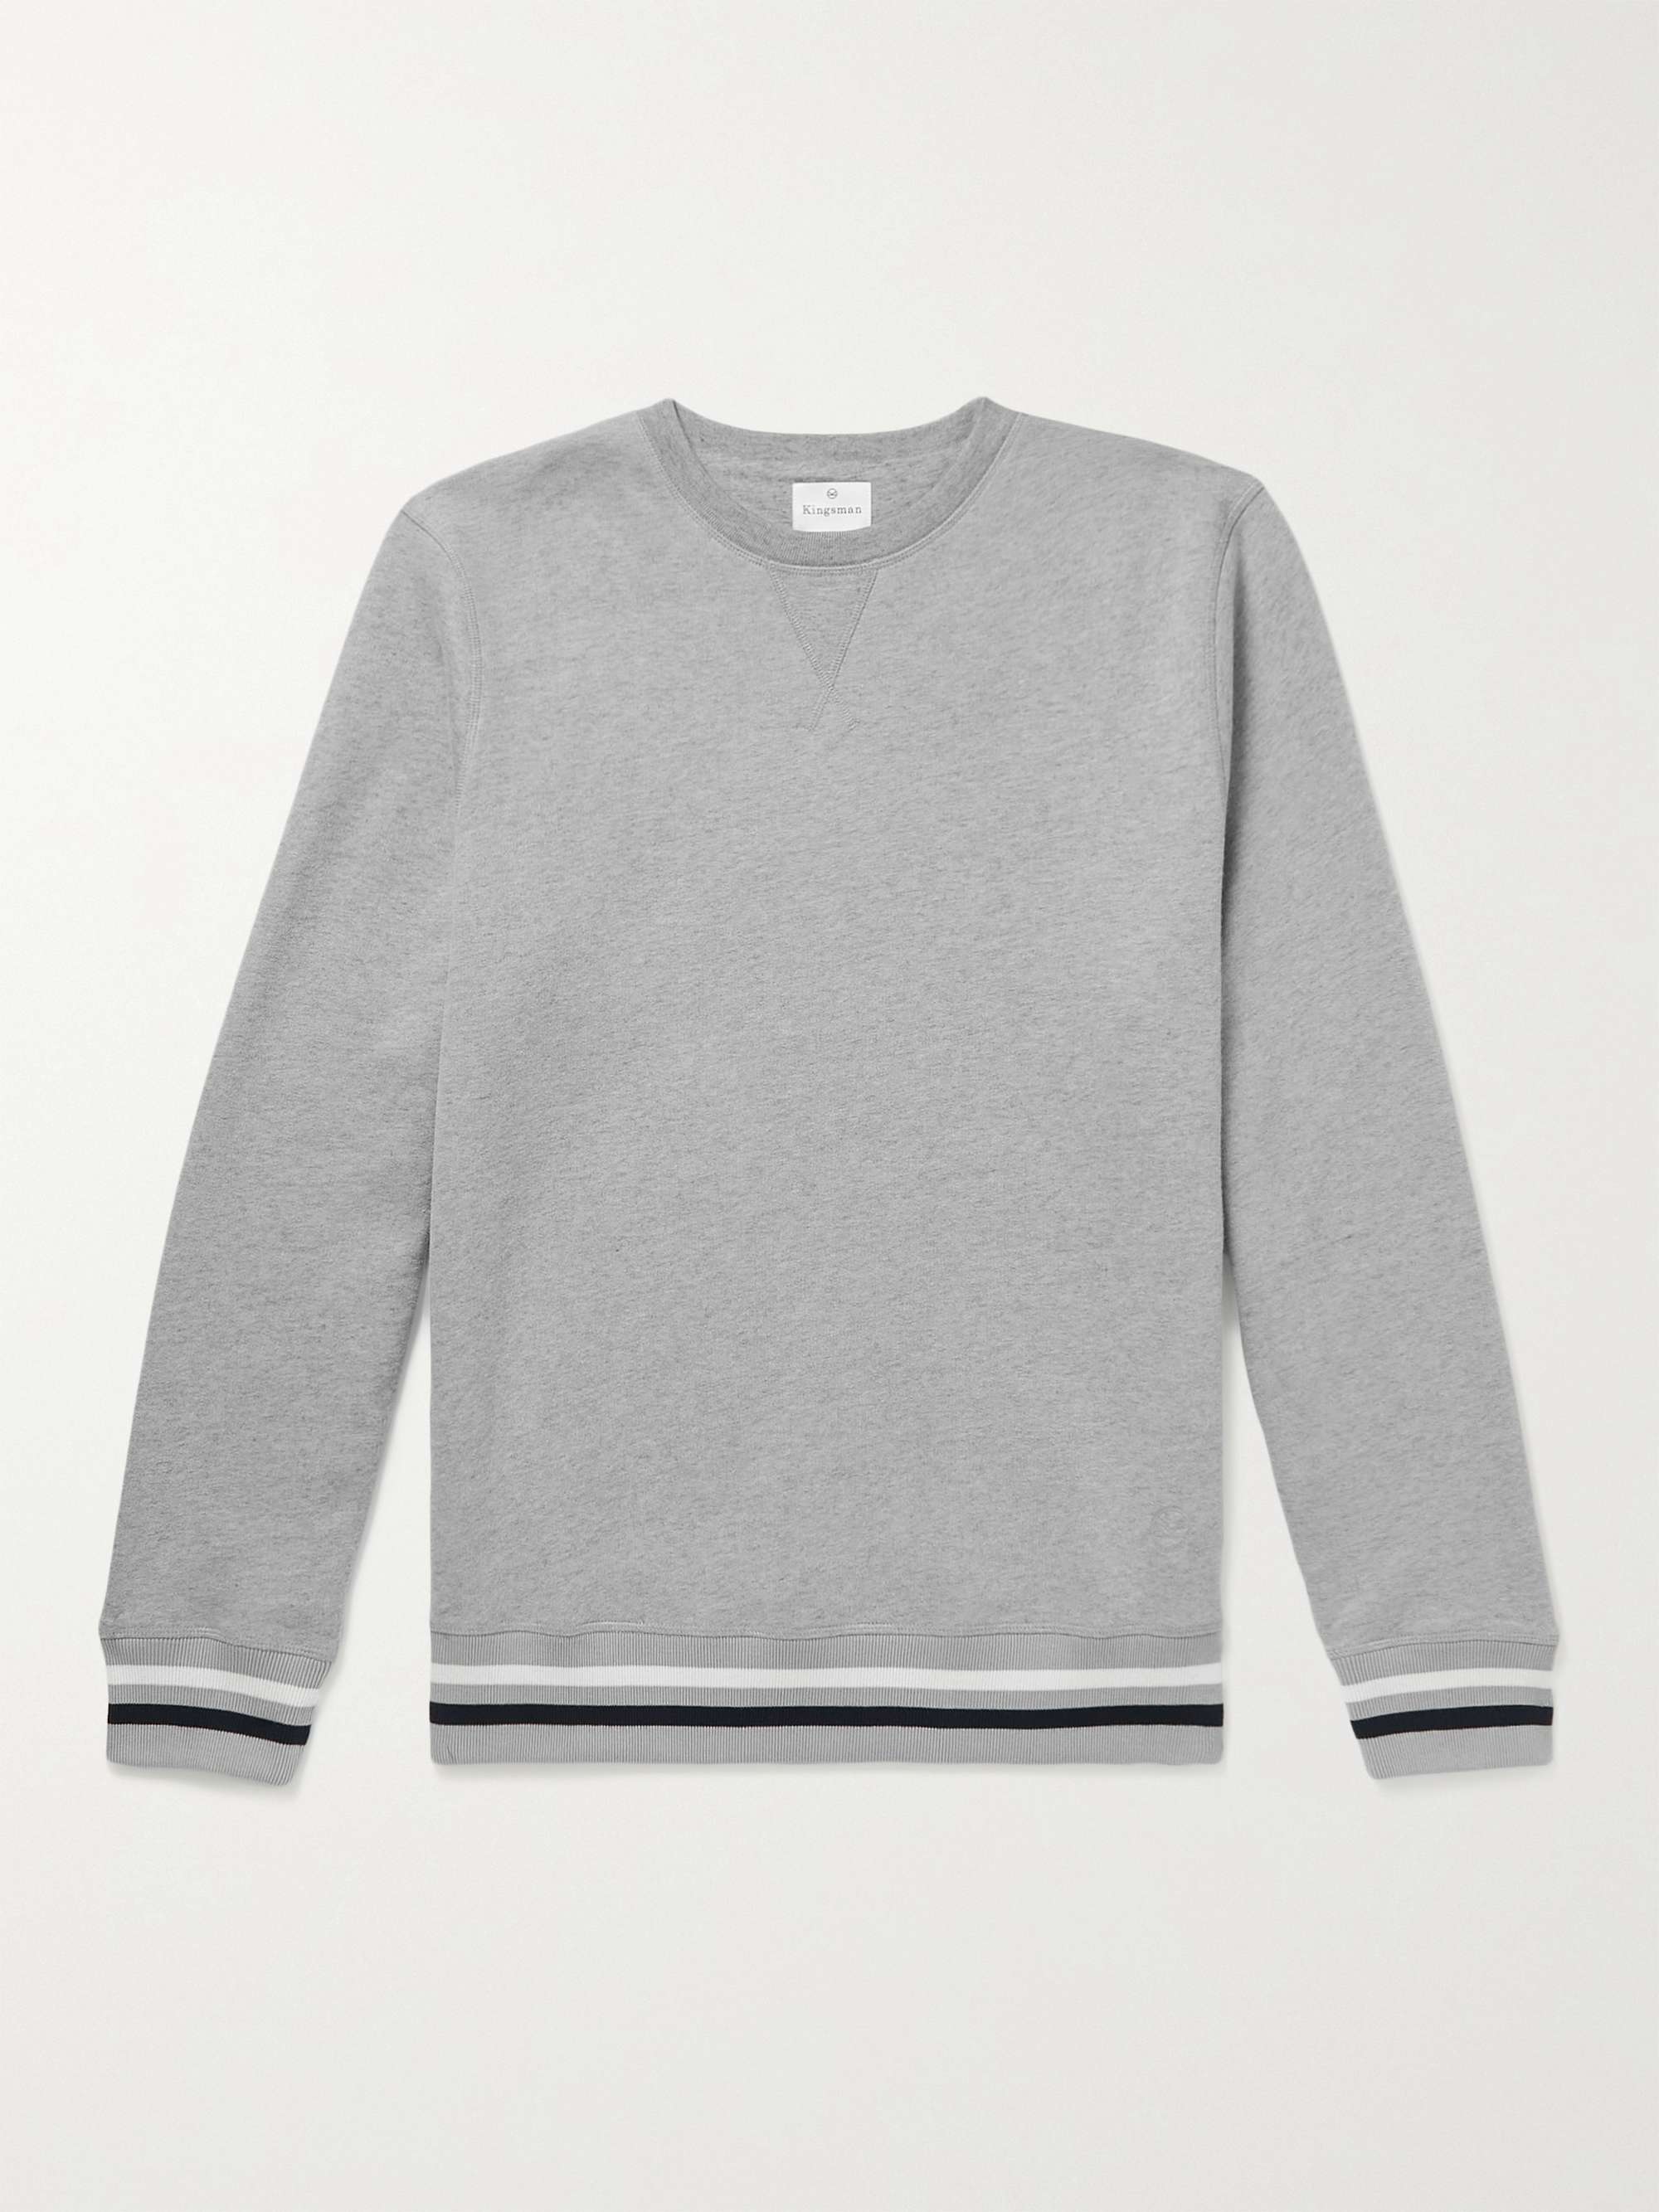 KINGSMAN Cashmere and Linen-Blend Sweater